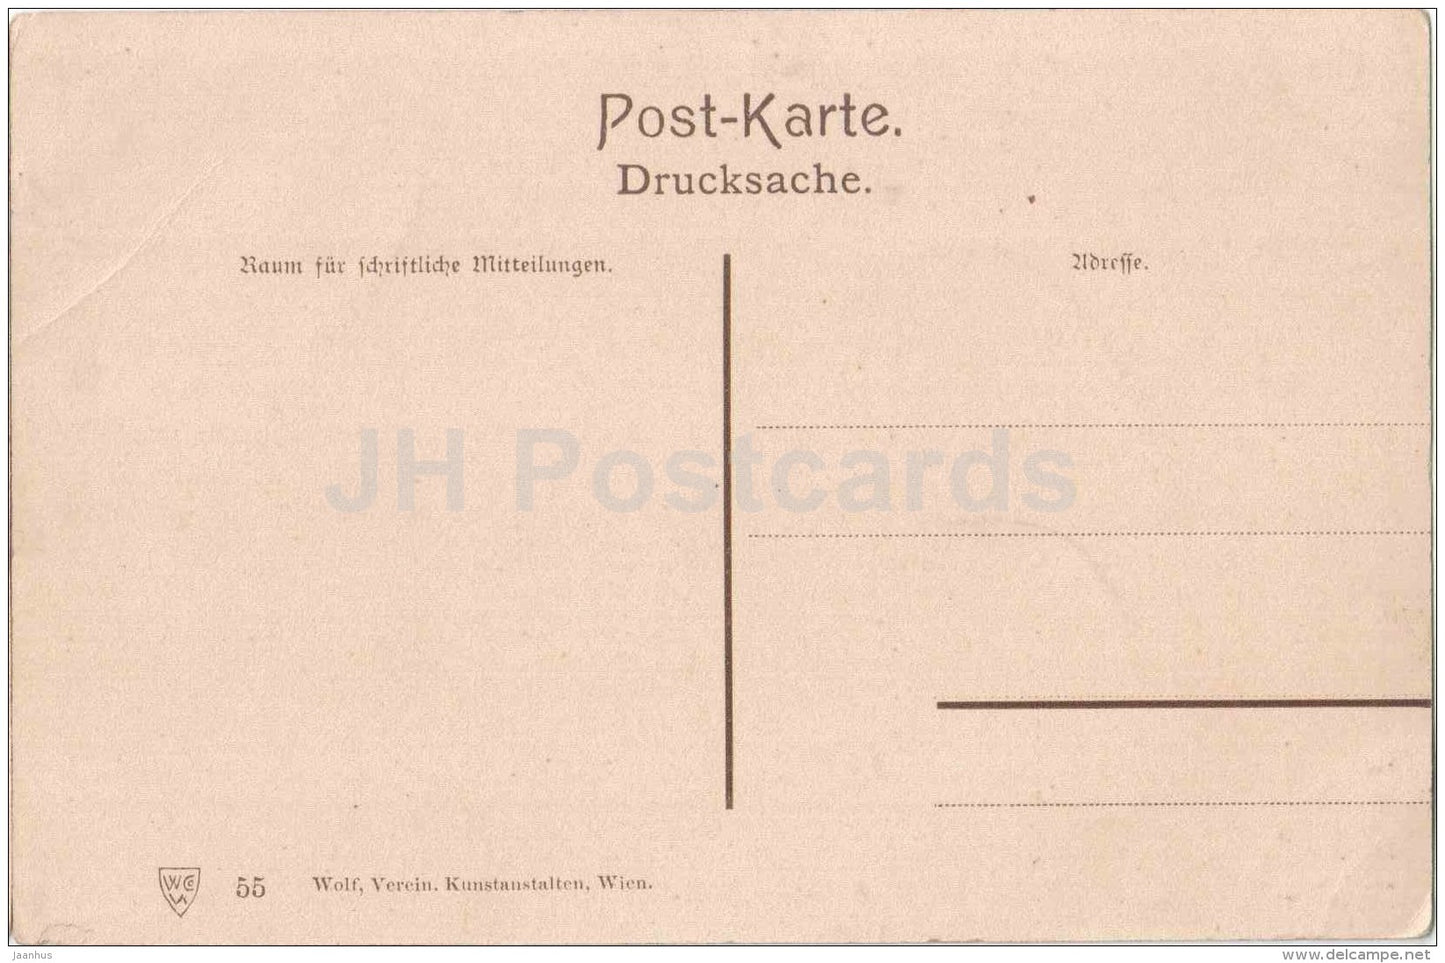 Pestsaule am Graben - Wien - Vienna - Austria - 55 - old postcard - unused - JH Postcards